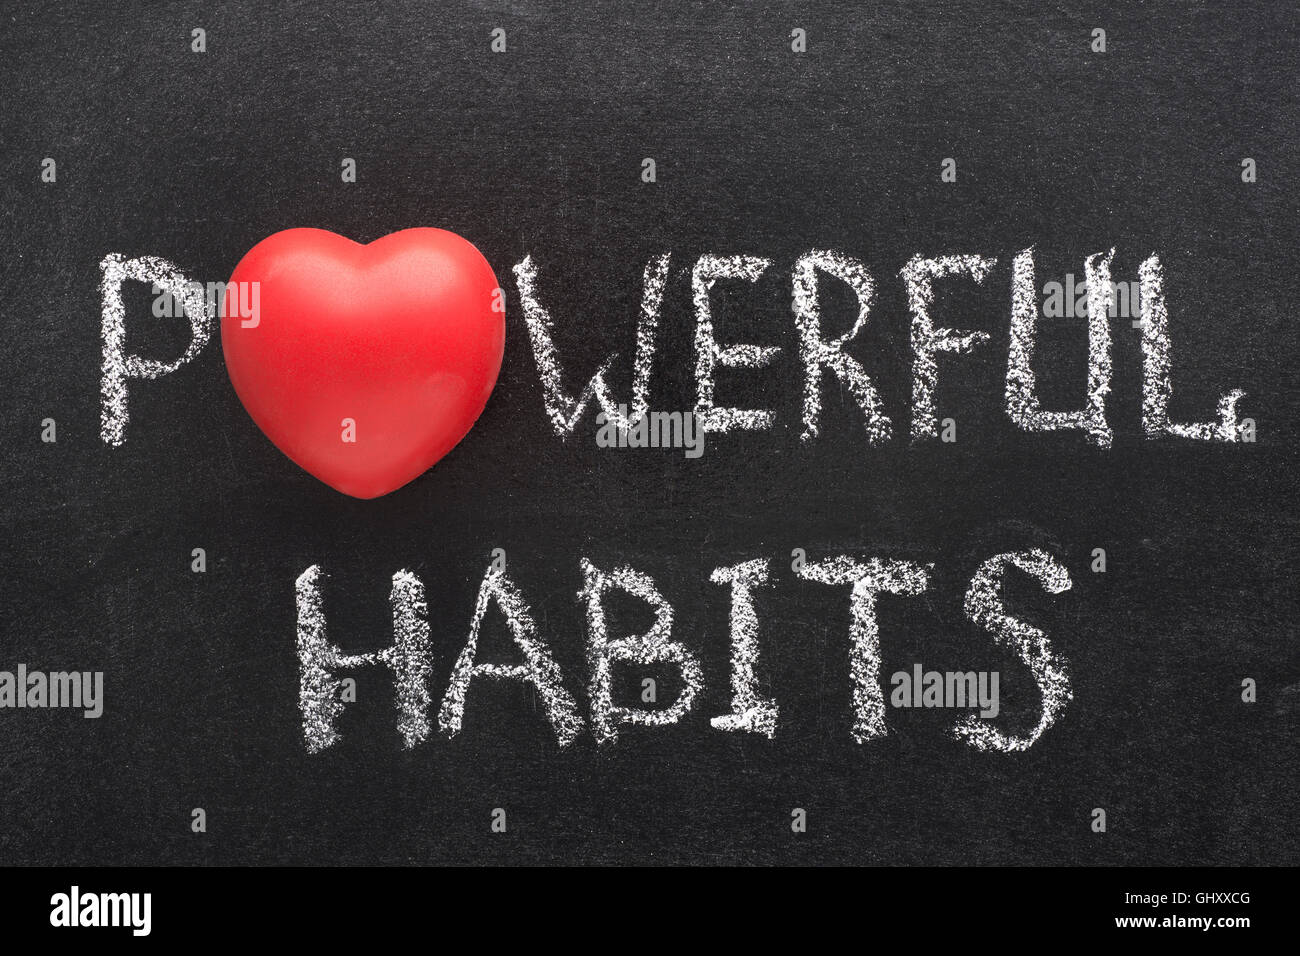 powerful habits phrase handwritten on blackboard with heart symbol instead of O Stock Photo